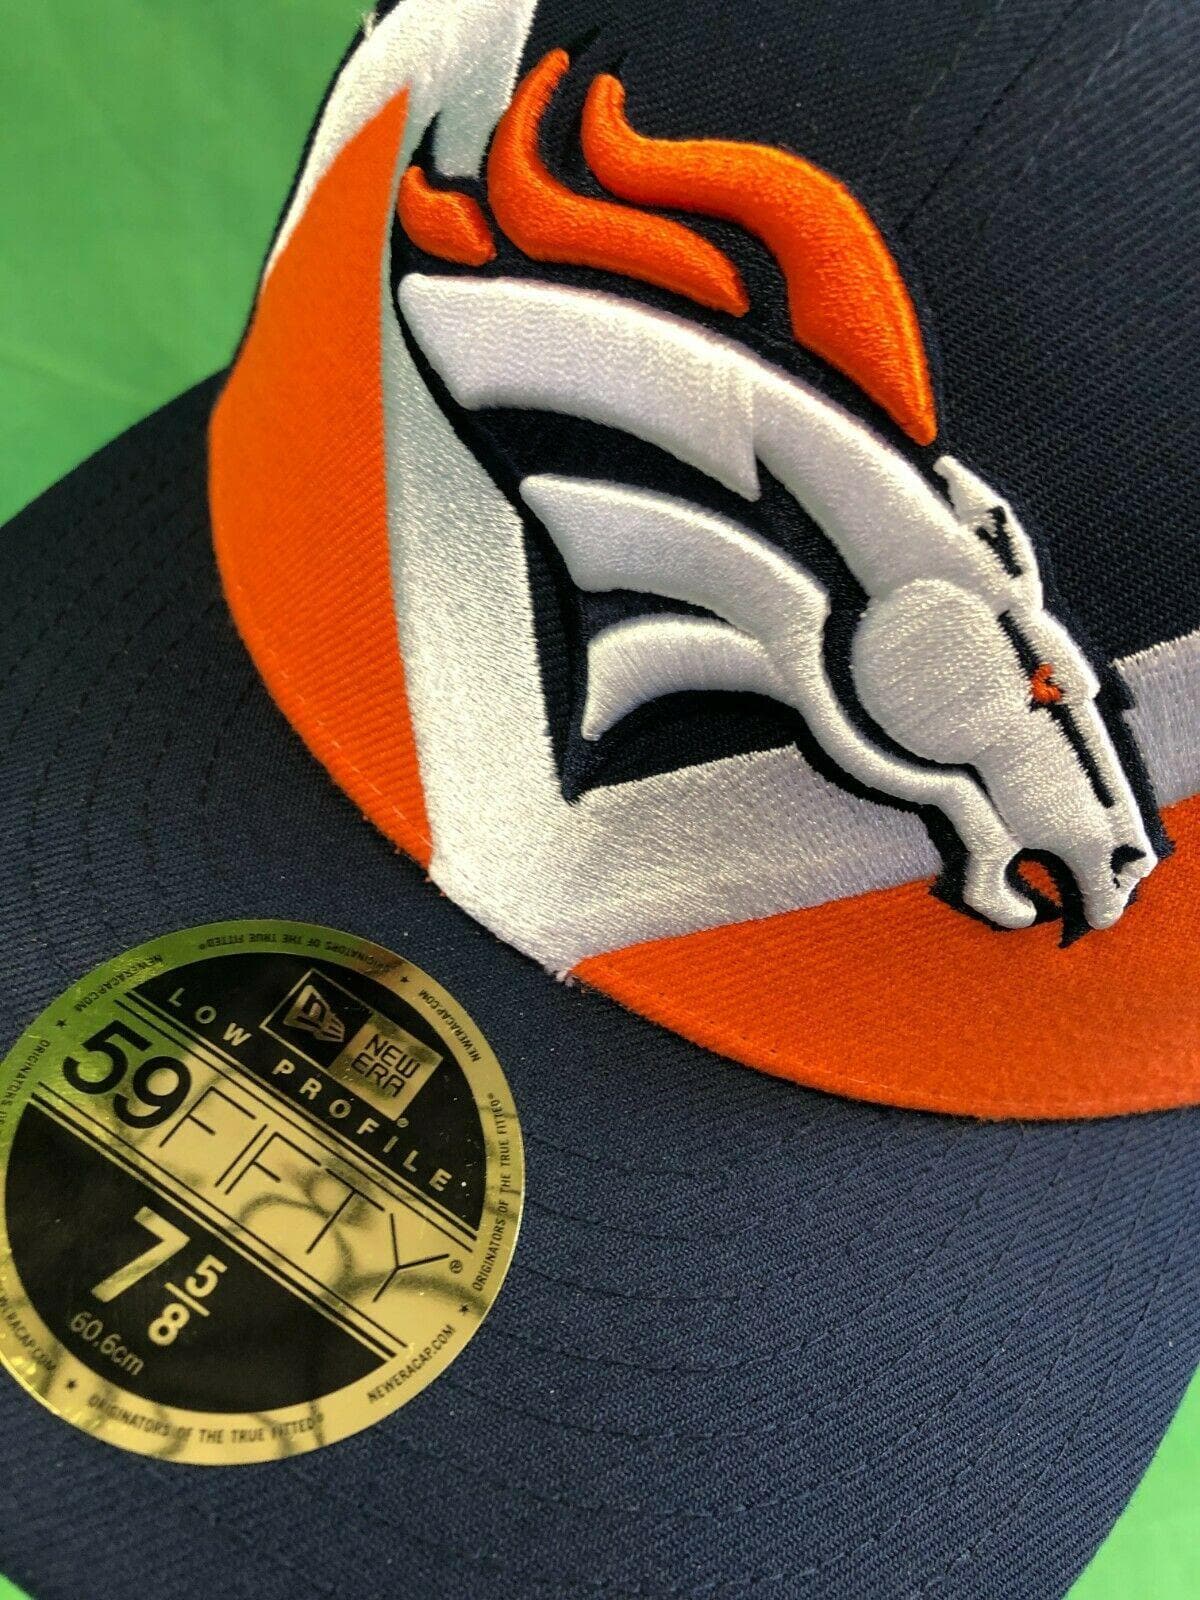 NFL Denver Broncos New Era 59FIFTY 2019 Draft Hat/Cap NWT 7-5/8